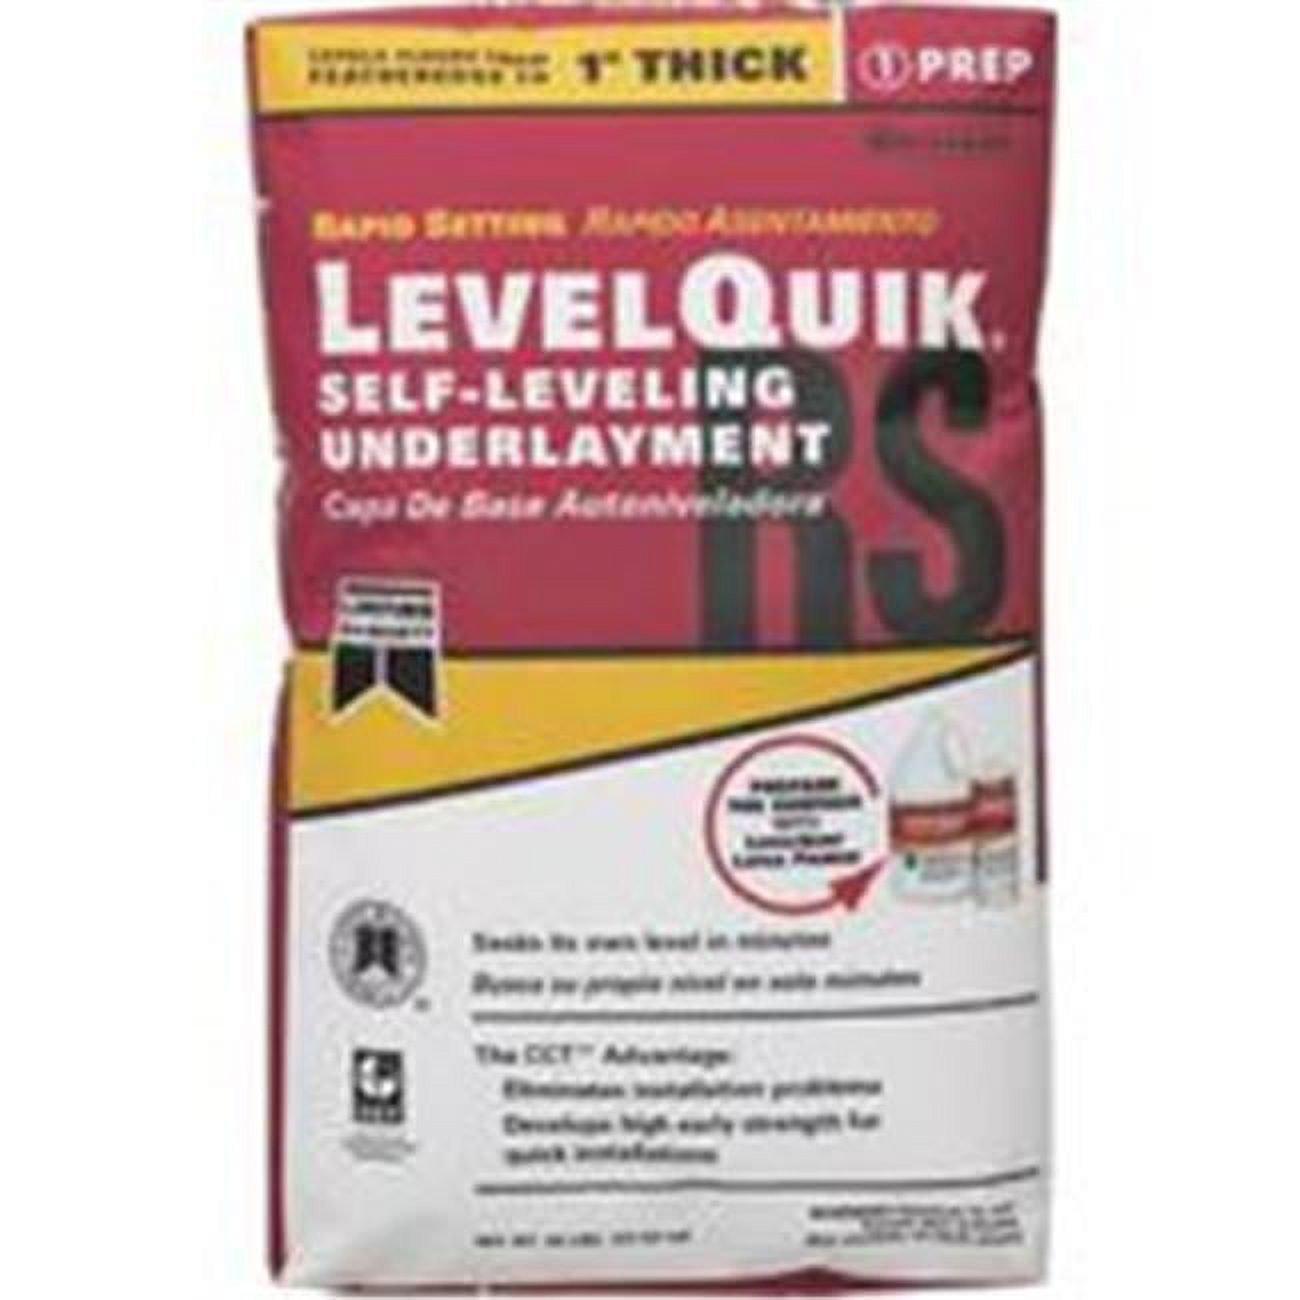 Level Quik Self-Leveling Underlayment Mix 10 Min Natural 50 Lb - image 1 of 3